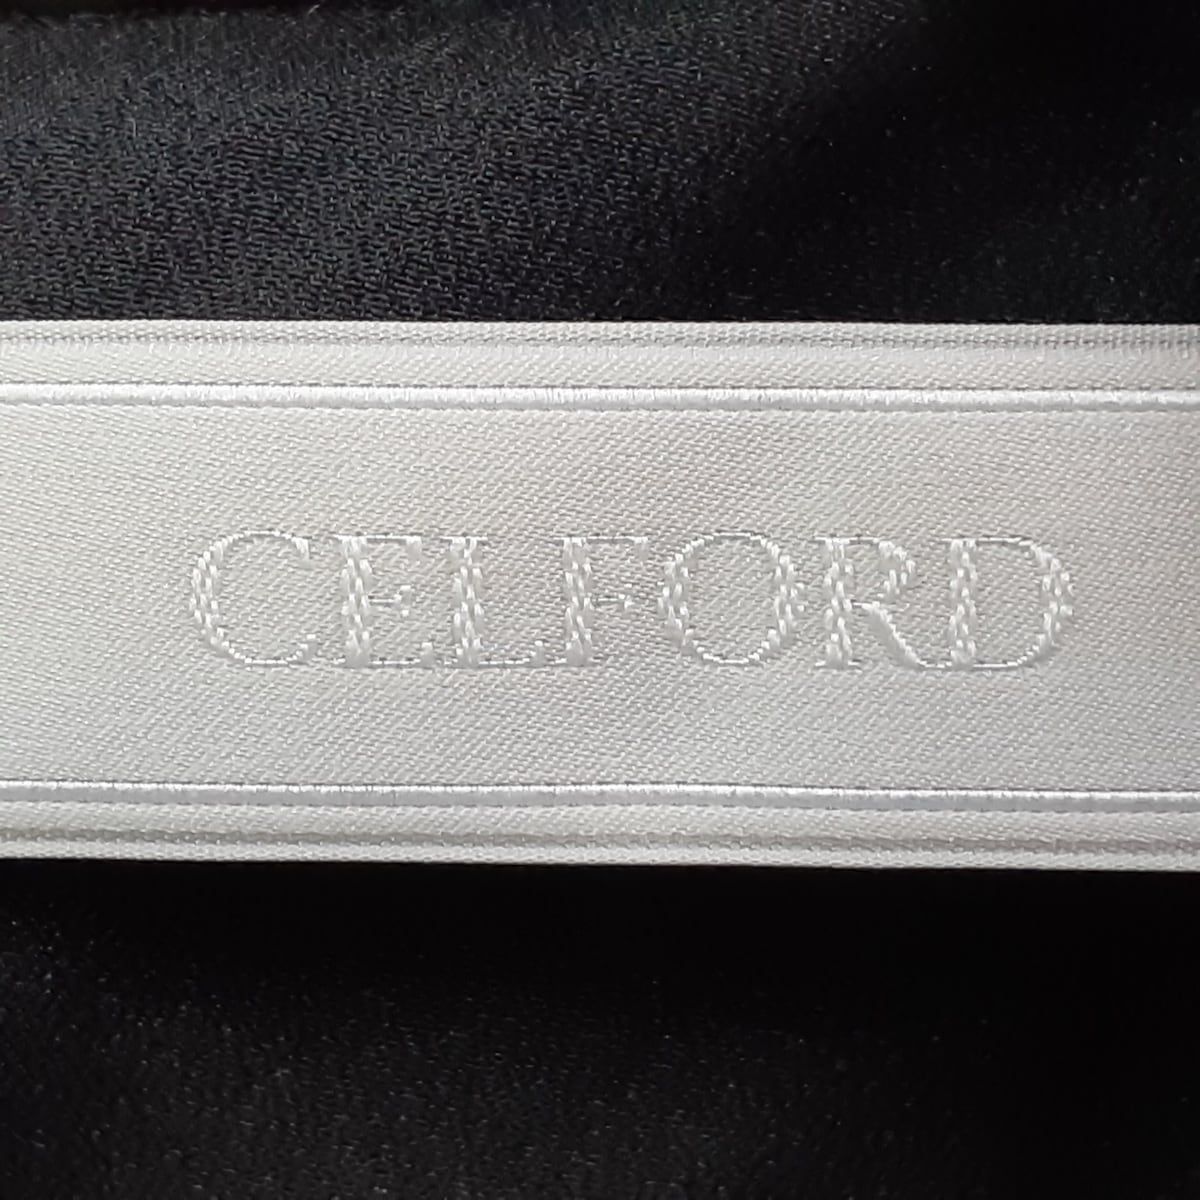 CELFORD(セルフォード) ワンピース サイズ36 S レディース美品 - 黒 ...